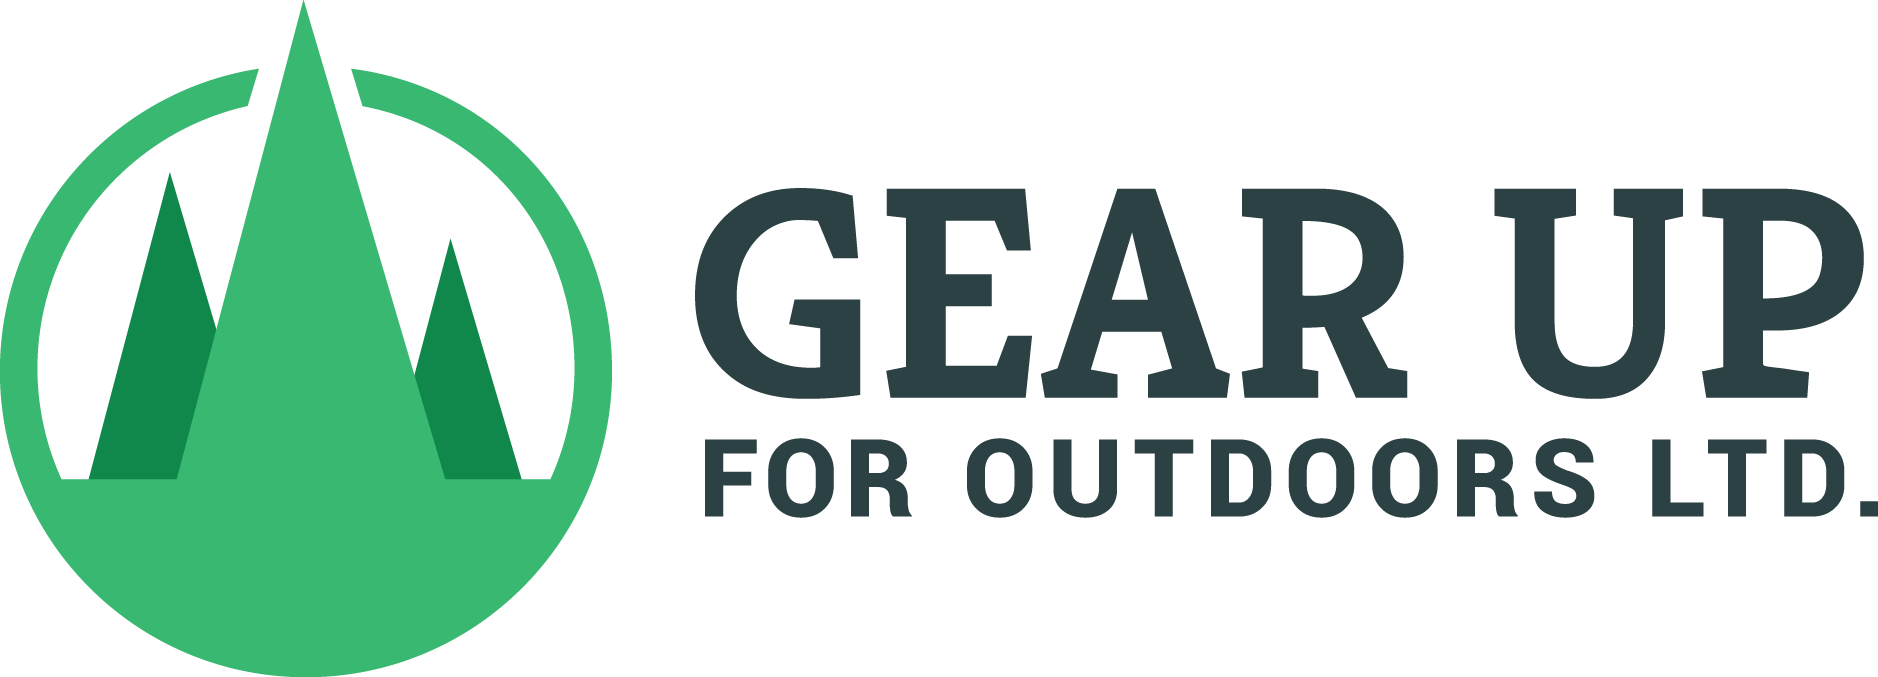 Outdoor Equipment Logo - Savings & CAA Rewards | Gear Up For Outdoors | CAA NEO